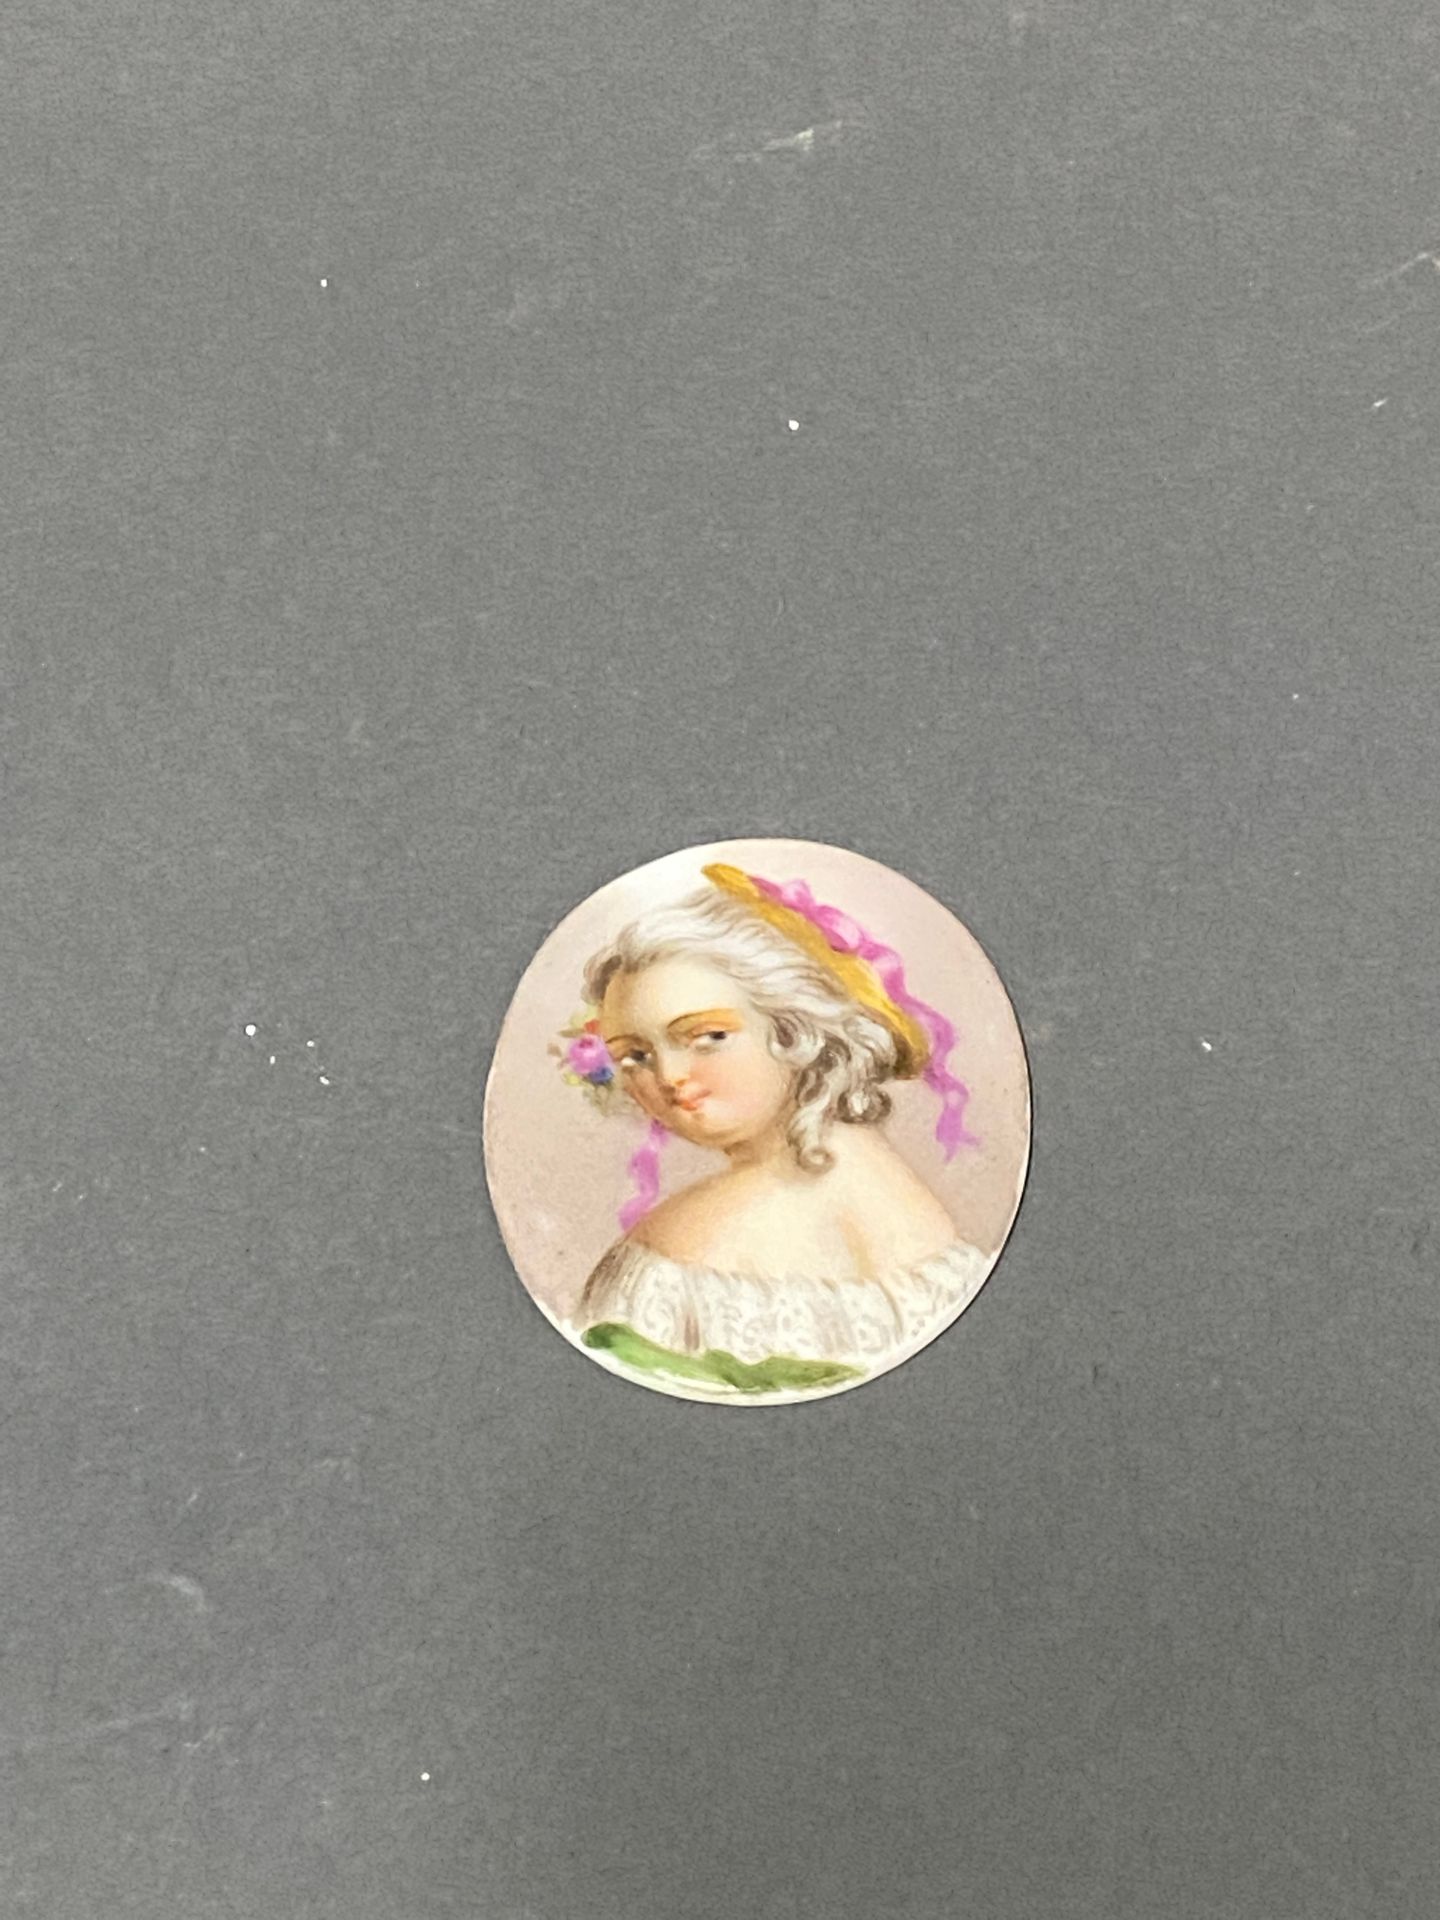 Null "Portrait of a child

Miniature on porcelain plate 

4,3 x 3,4 cm